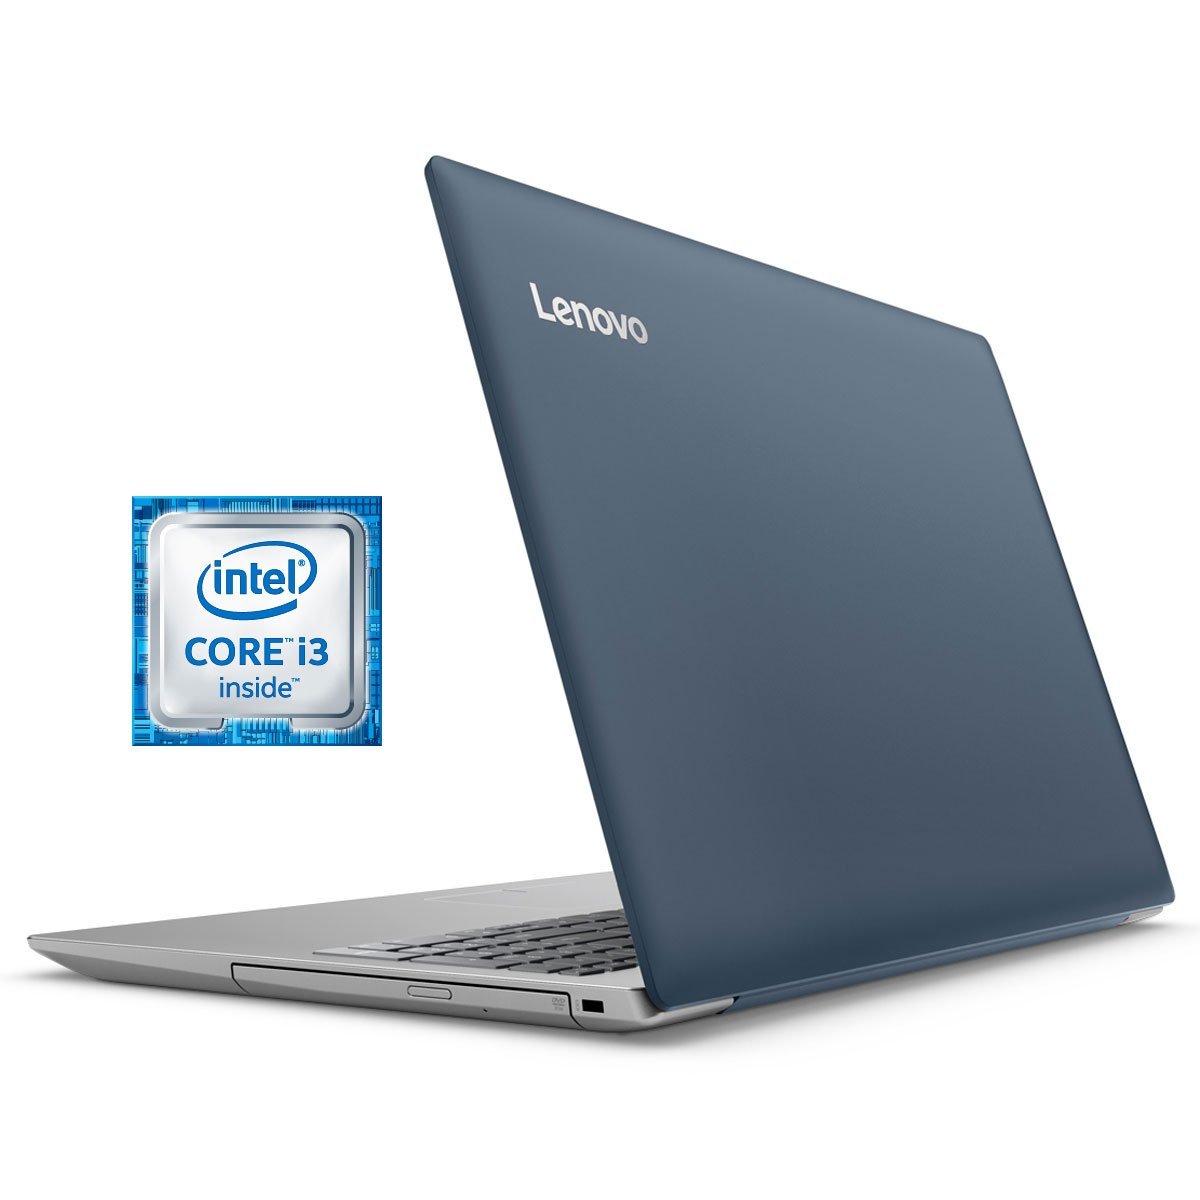 Lenovo IDEAPAD 320-15isk. ДНС ноутбук леново 29999. Компьютер леново ДНС. ДНС Уфа ноутбук леново.